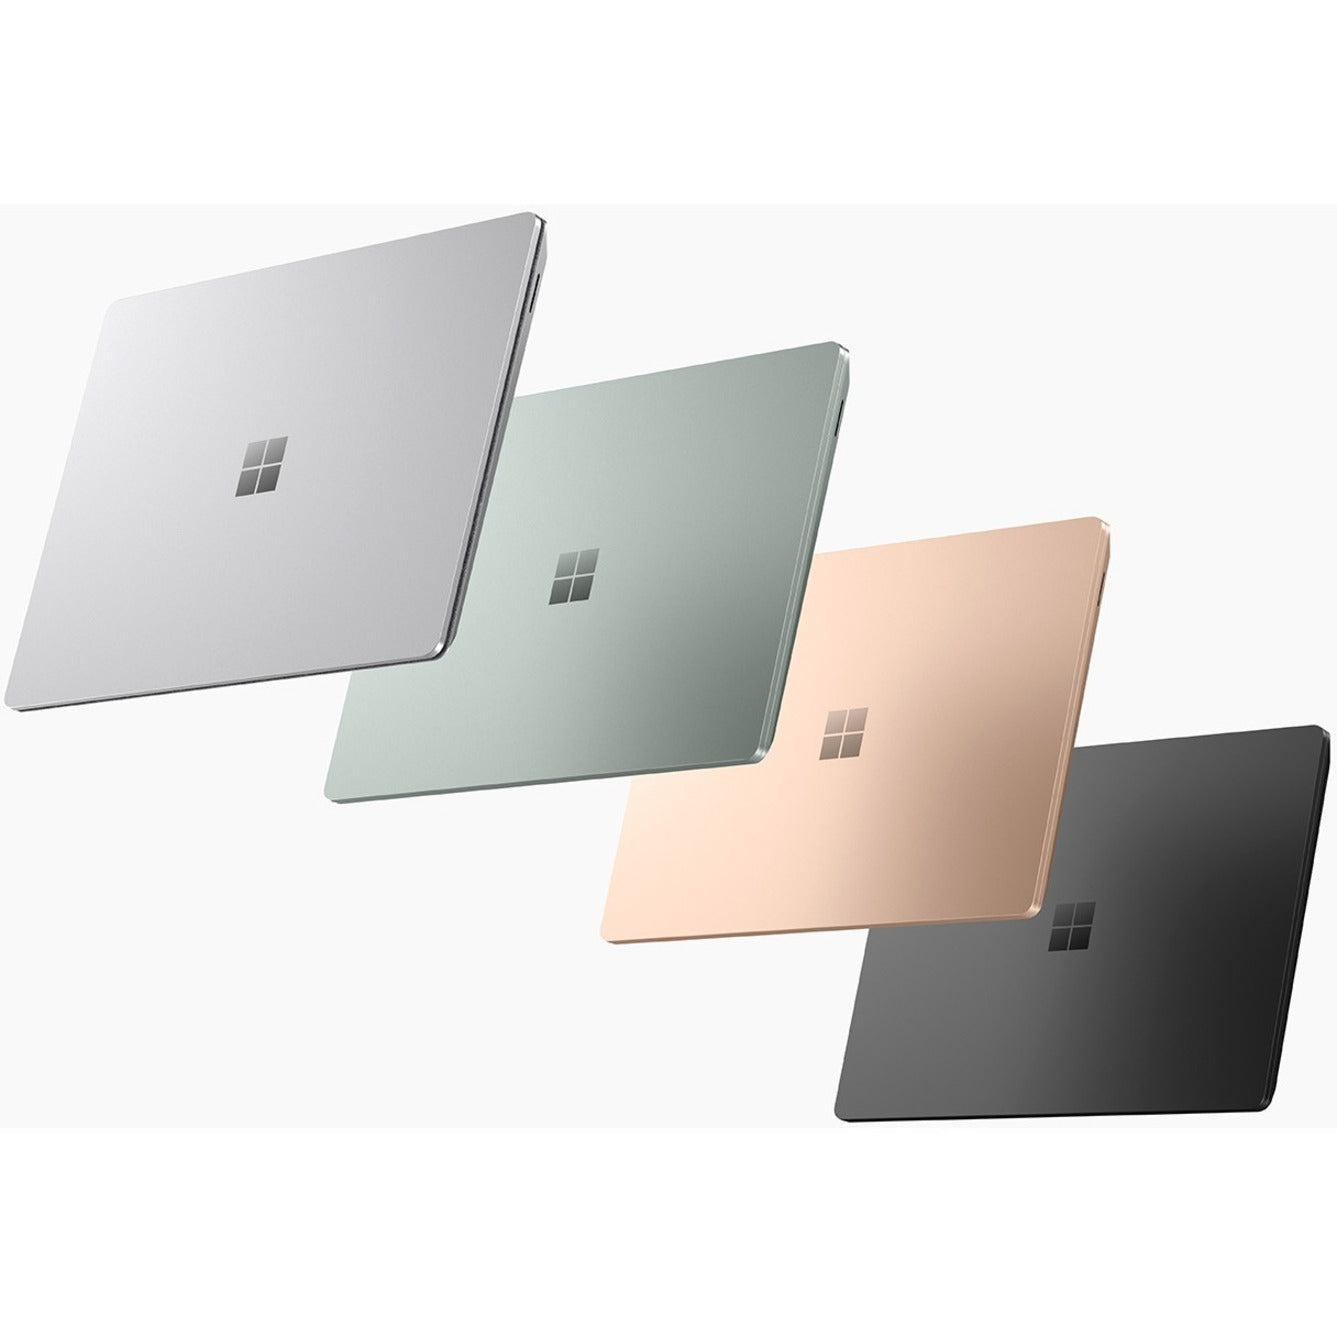 Microsoft RBI-00062 Surface Laptop 5 Notebook, 13.5" Touchscreen, Core i7, 16GB RAM, 512GB SSD, Windows 10 Pro